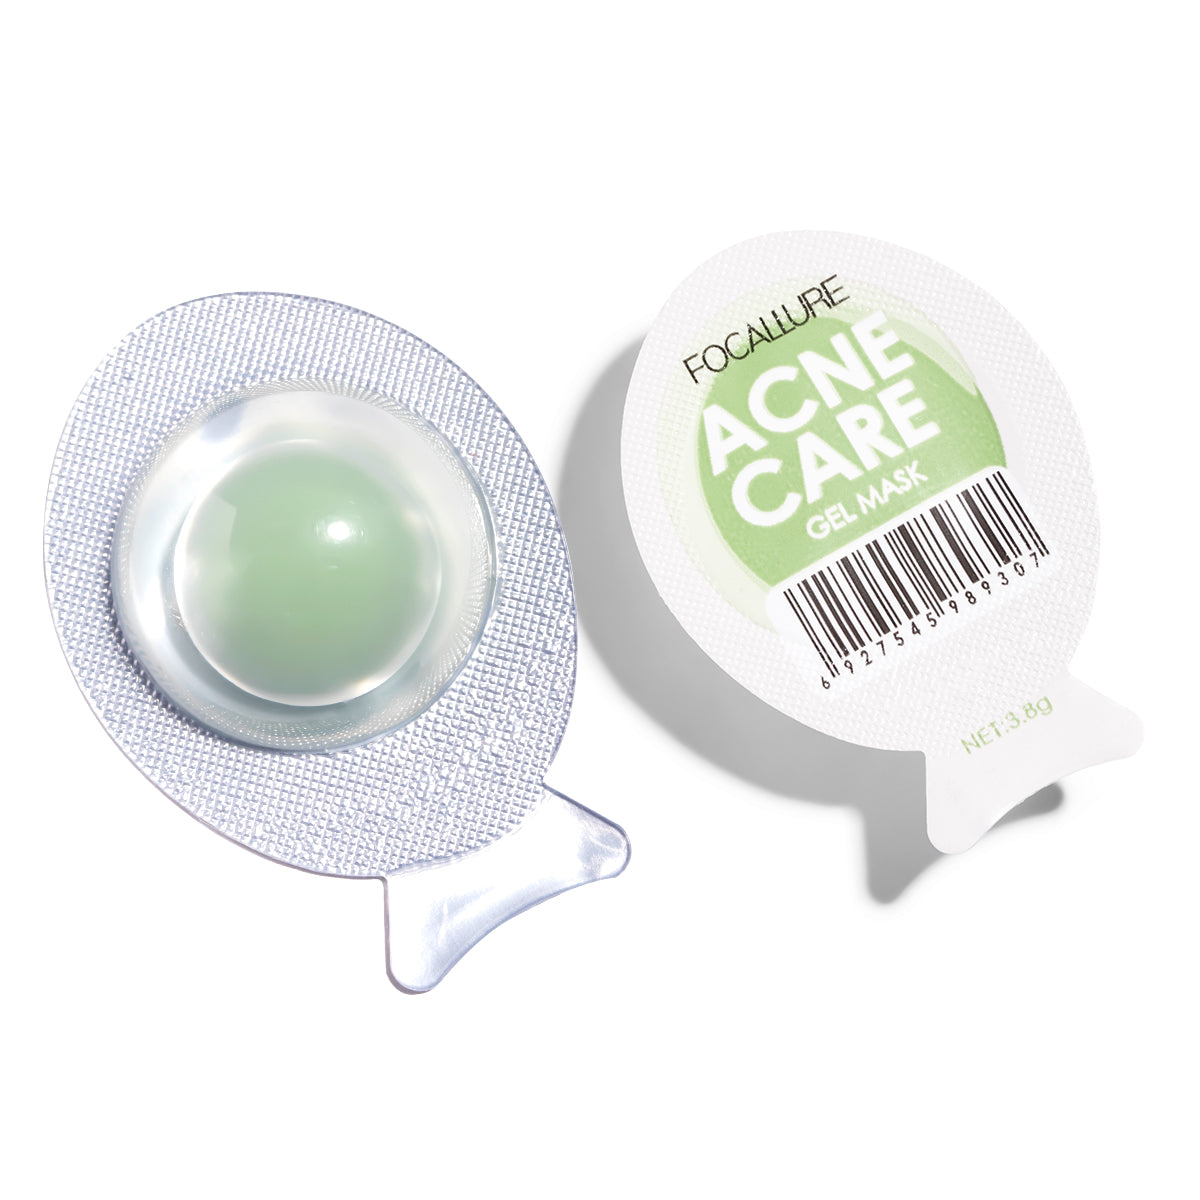 Focallure Gel Mask – Acne Care